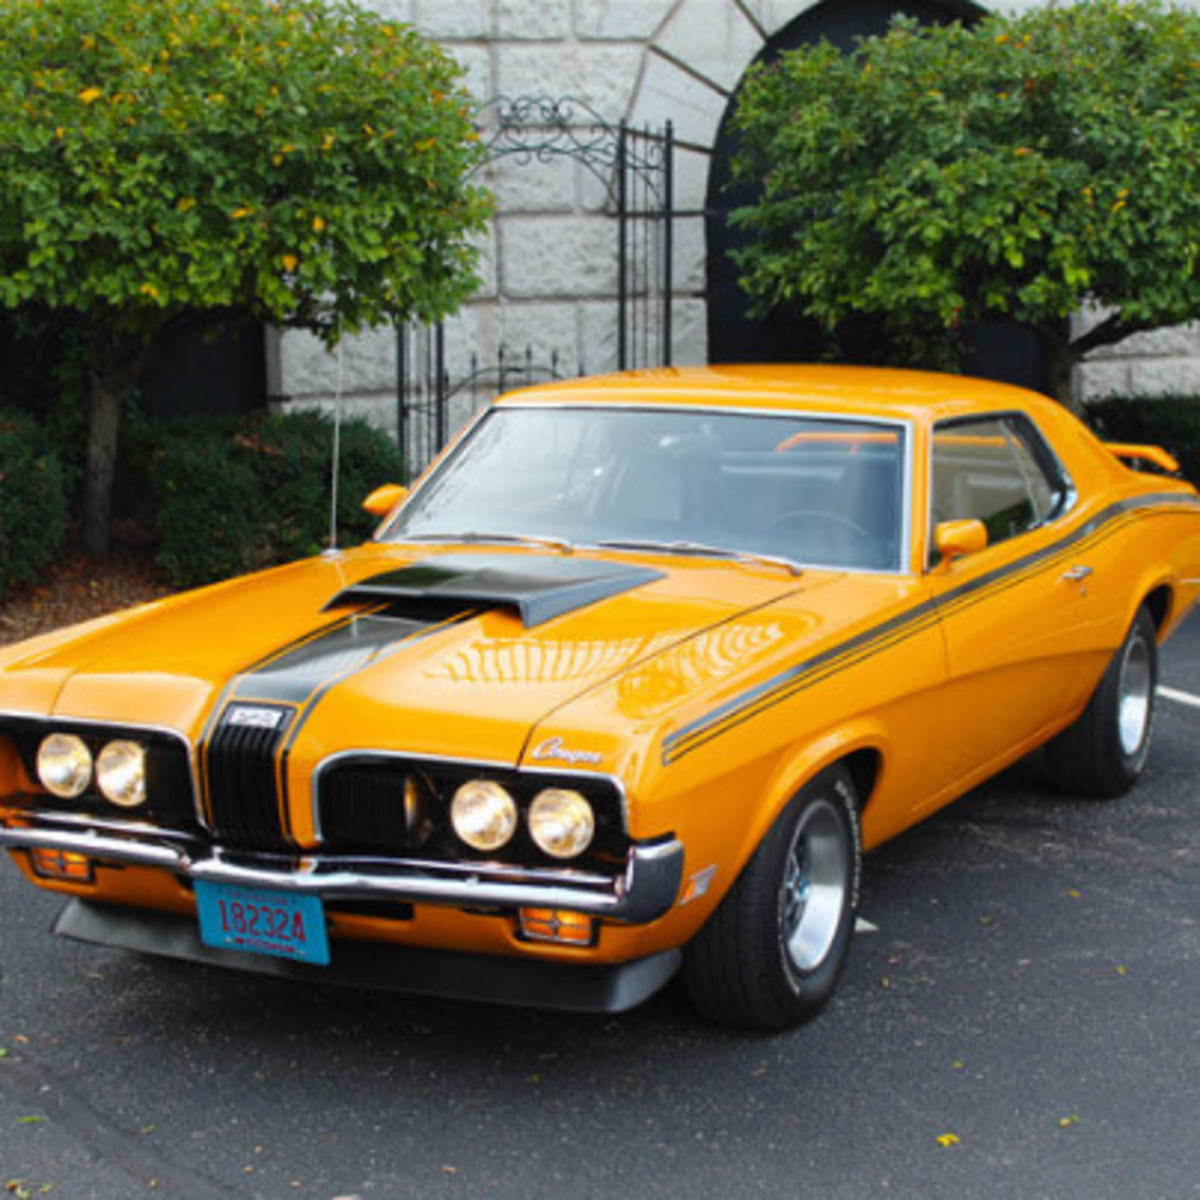 Car of the Week: 1970 Mercury Cougar Eliminator - Old Cars Weekly